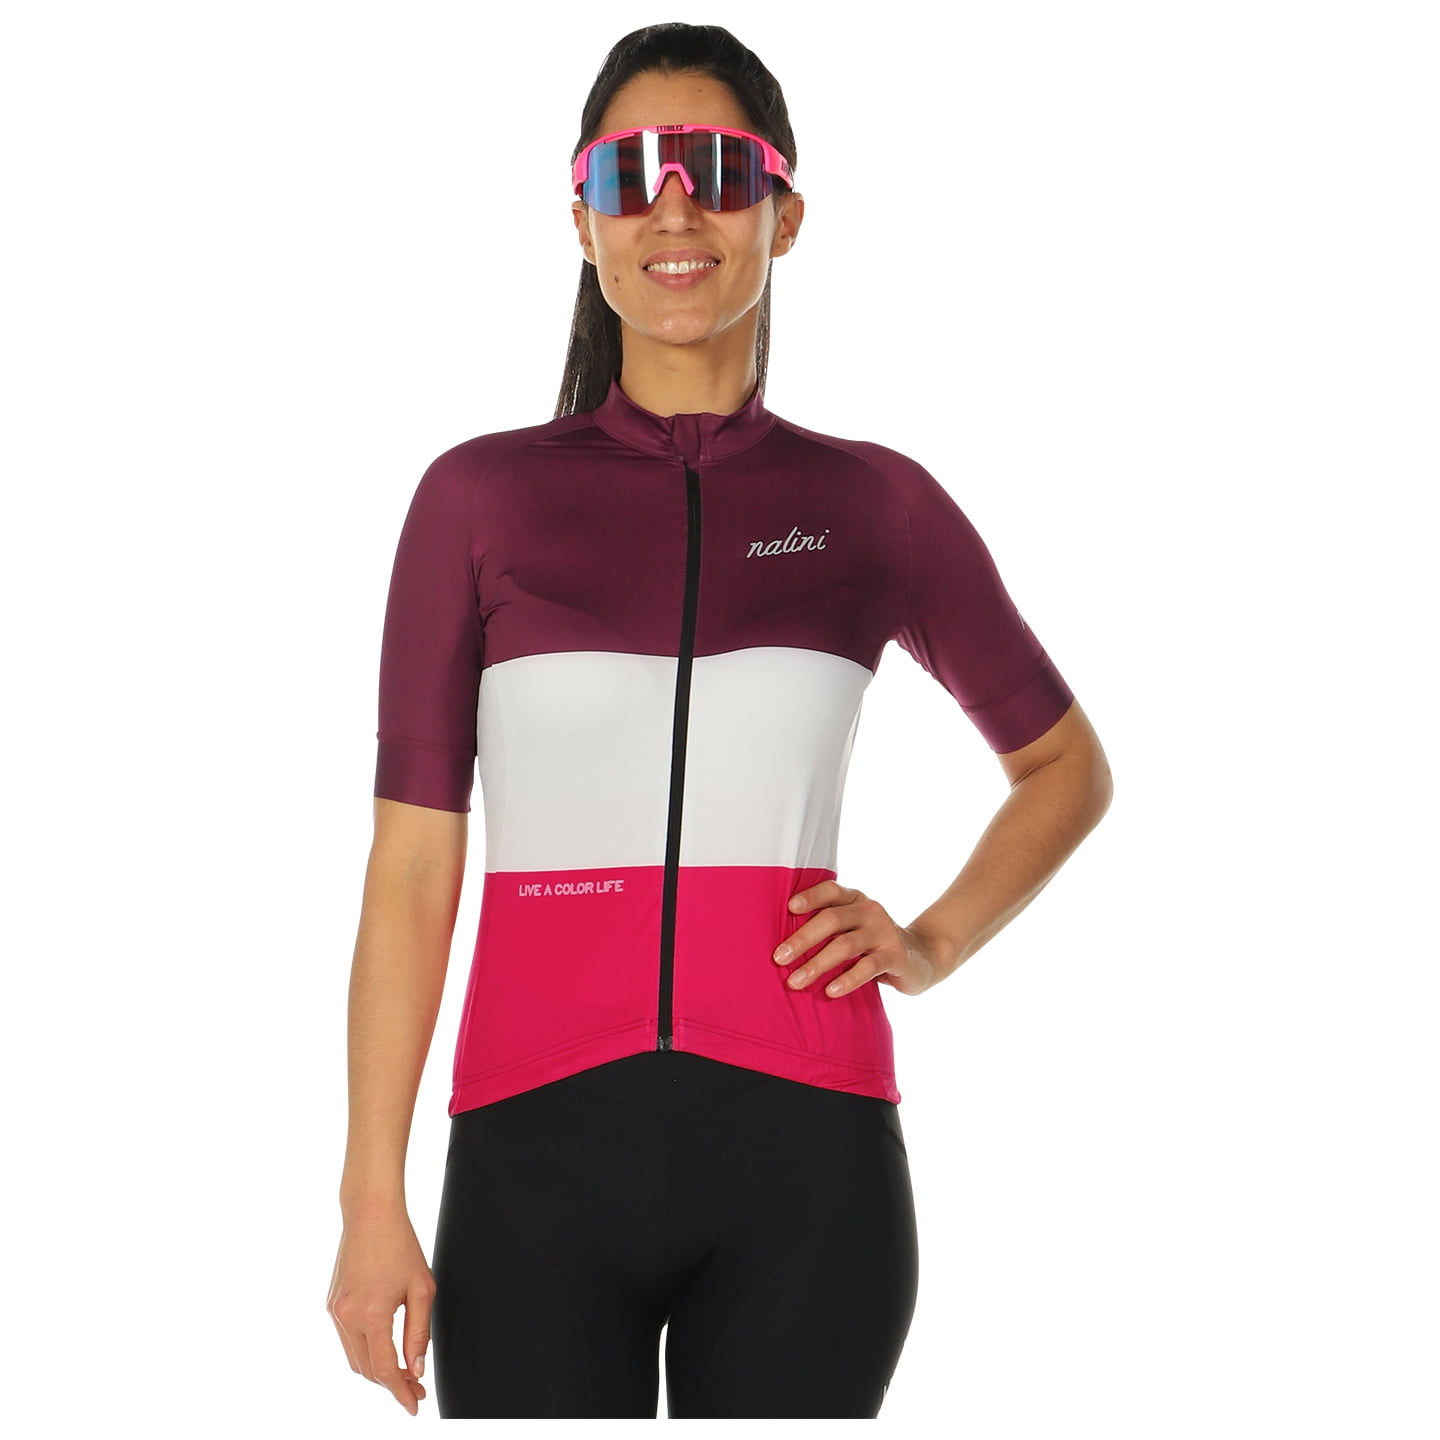 NALINI San Francisco Women’s Jersey Women’s Short Sleeve Jersey, size XL, Cycle jersey, Bike gear